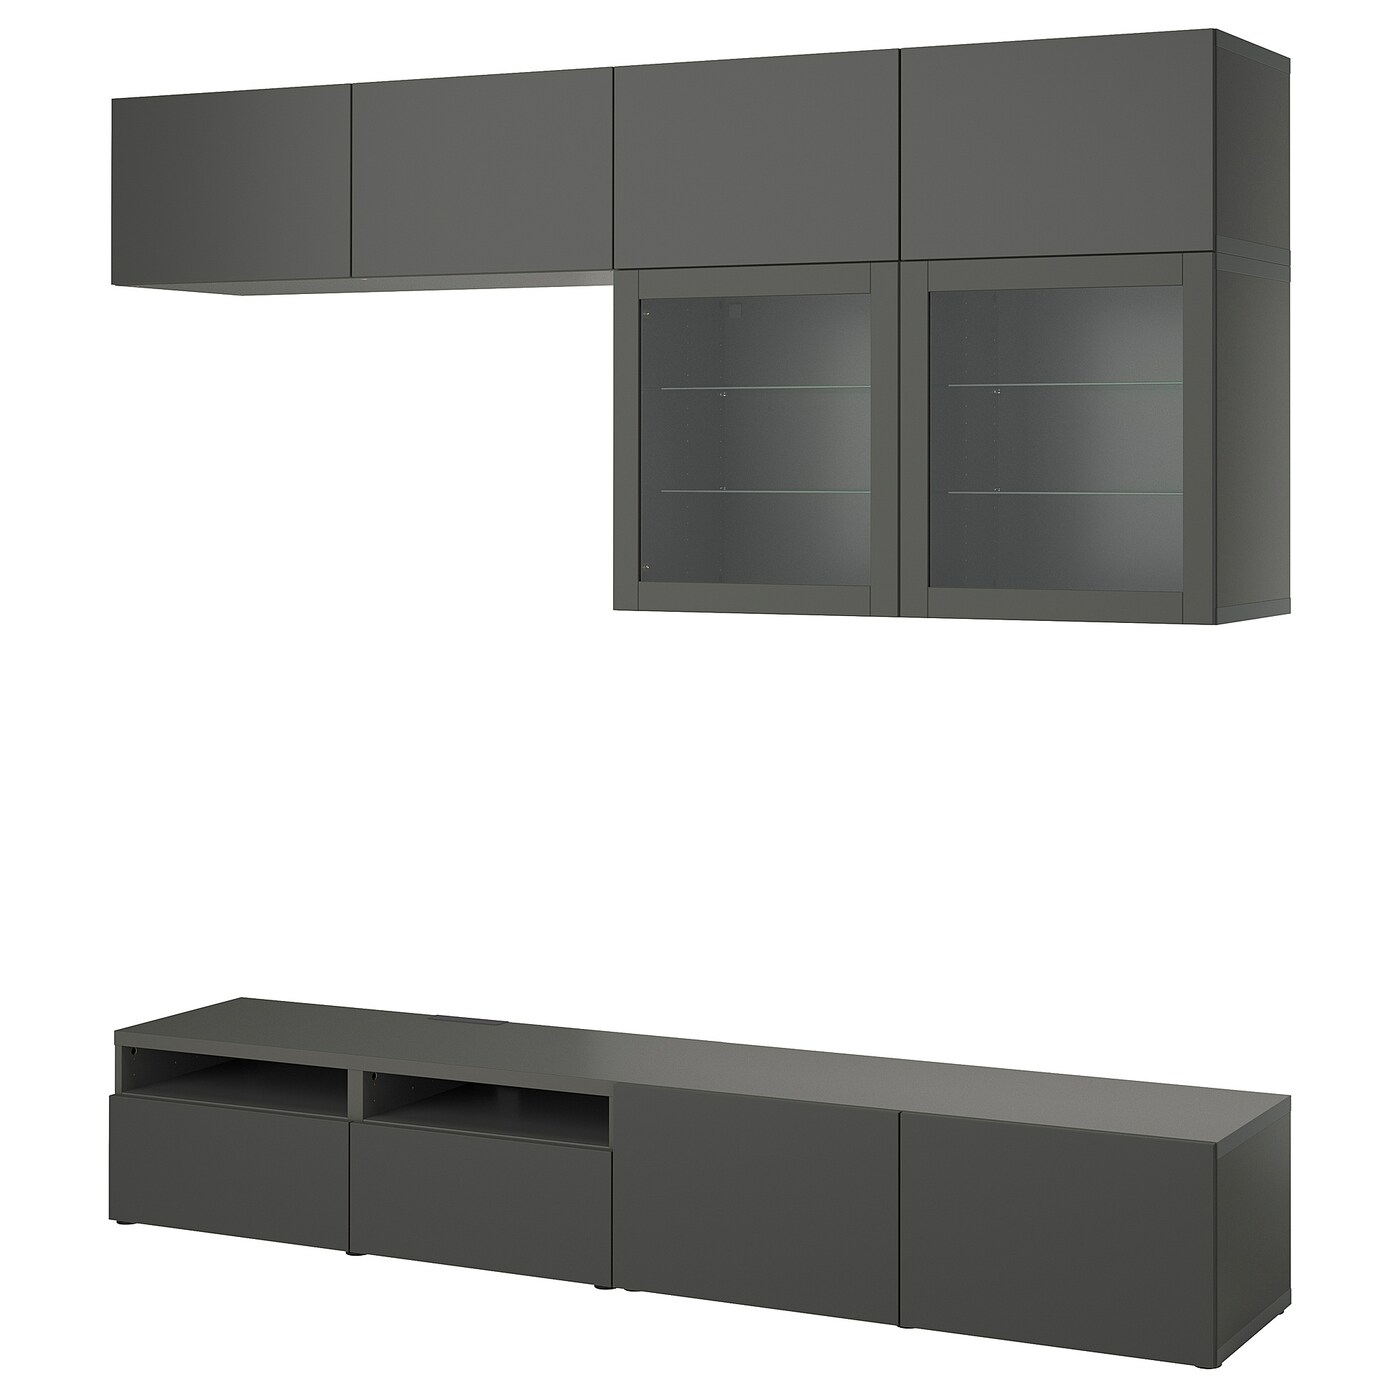 Комбинация для хранения ТВ - IKEA BESTÅ/BESTA, 231x42x240см, темно-серый, БЕСТО ИКЕА